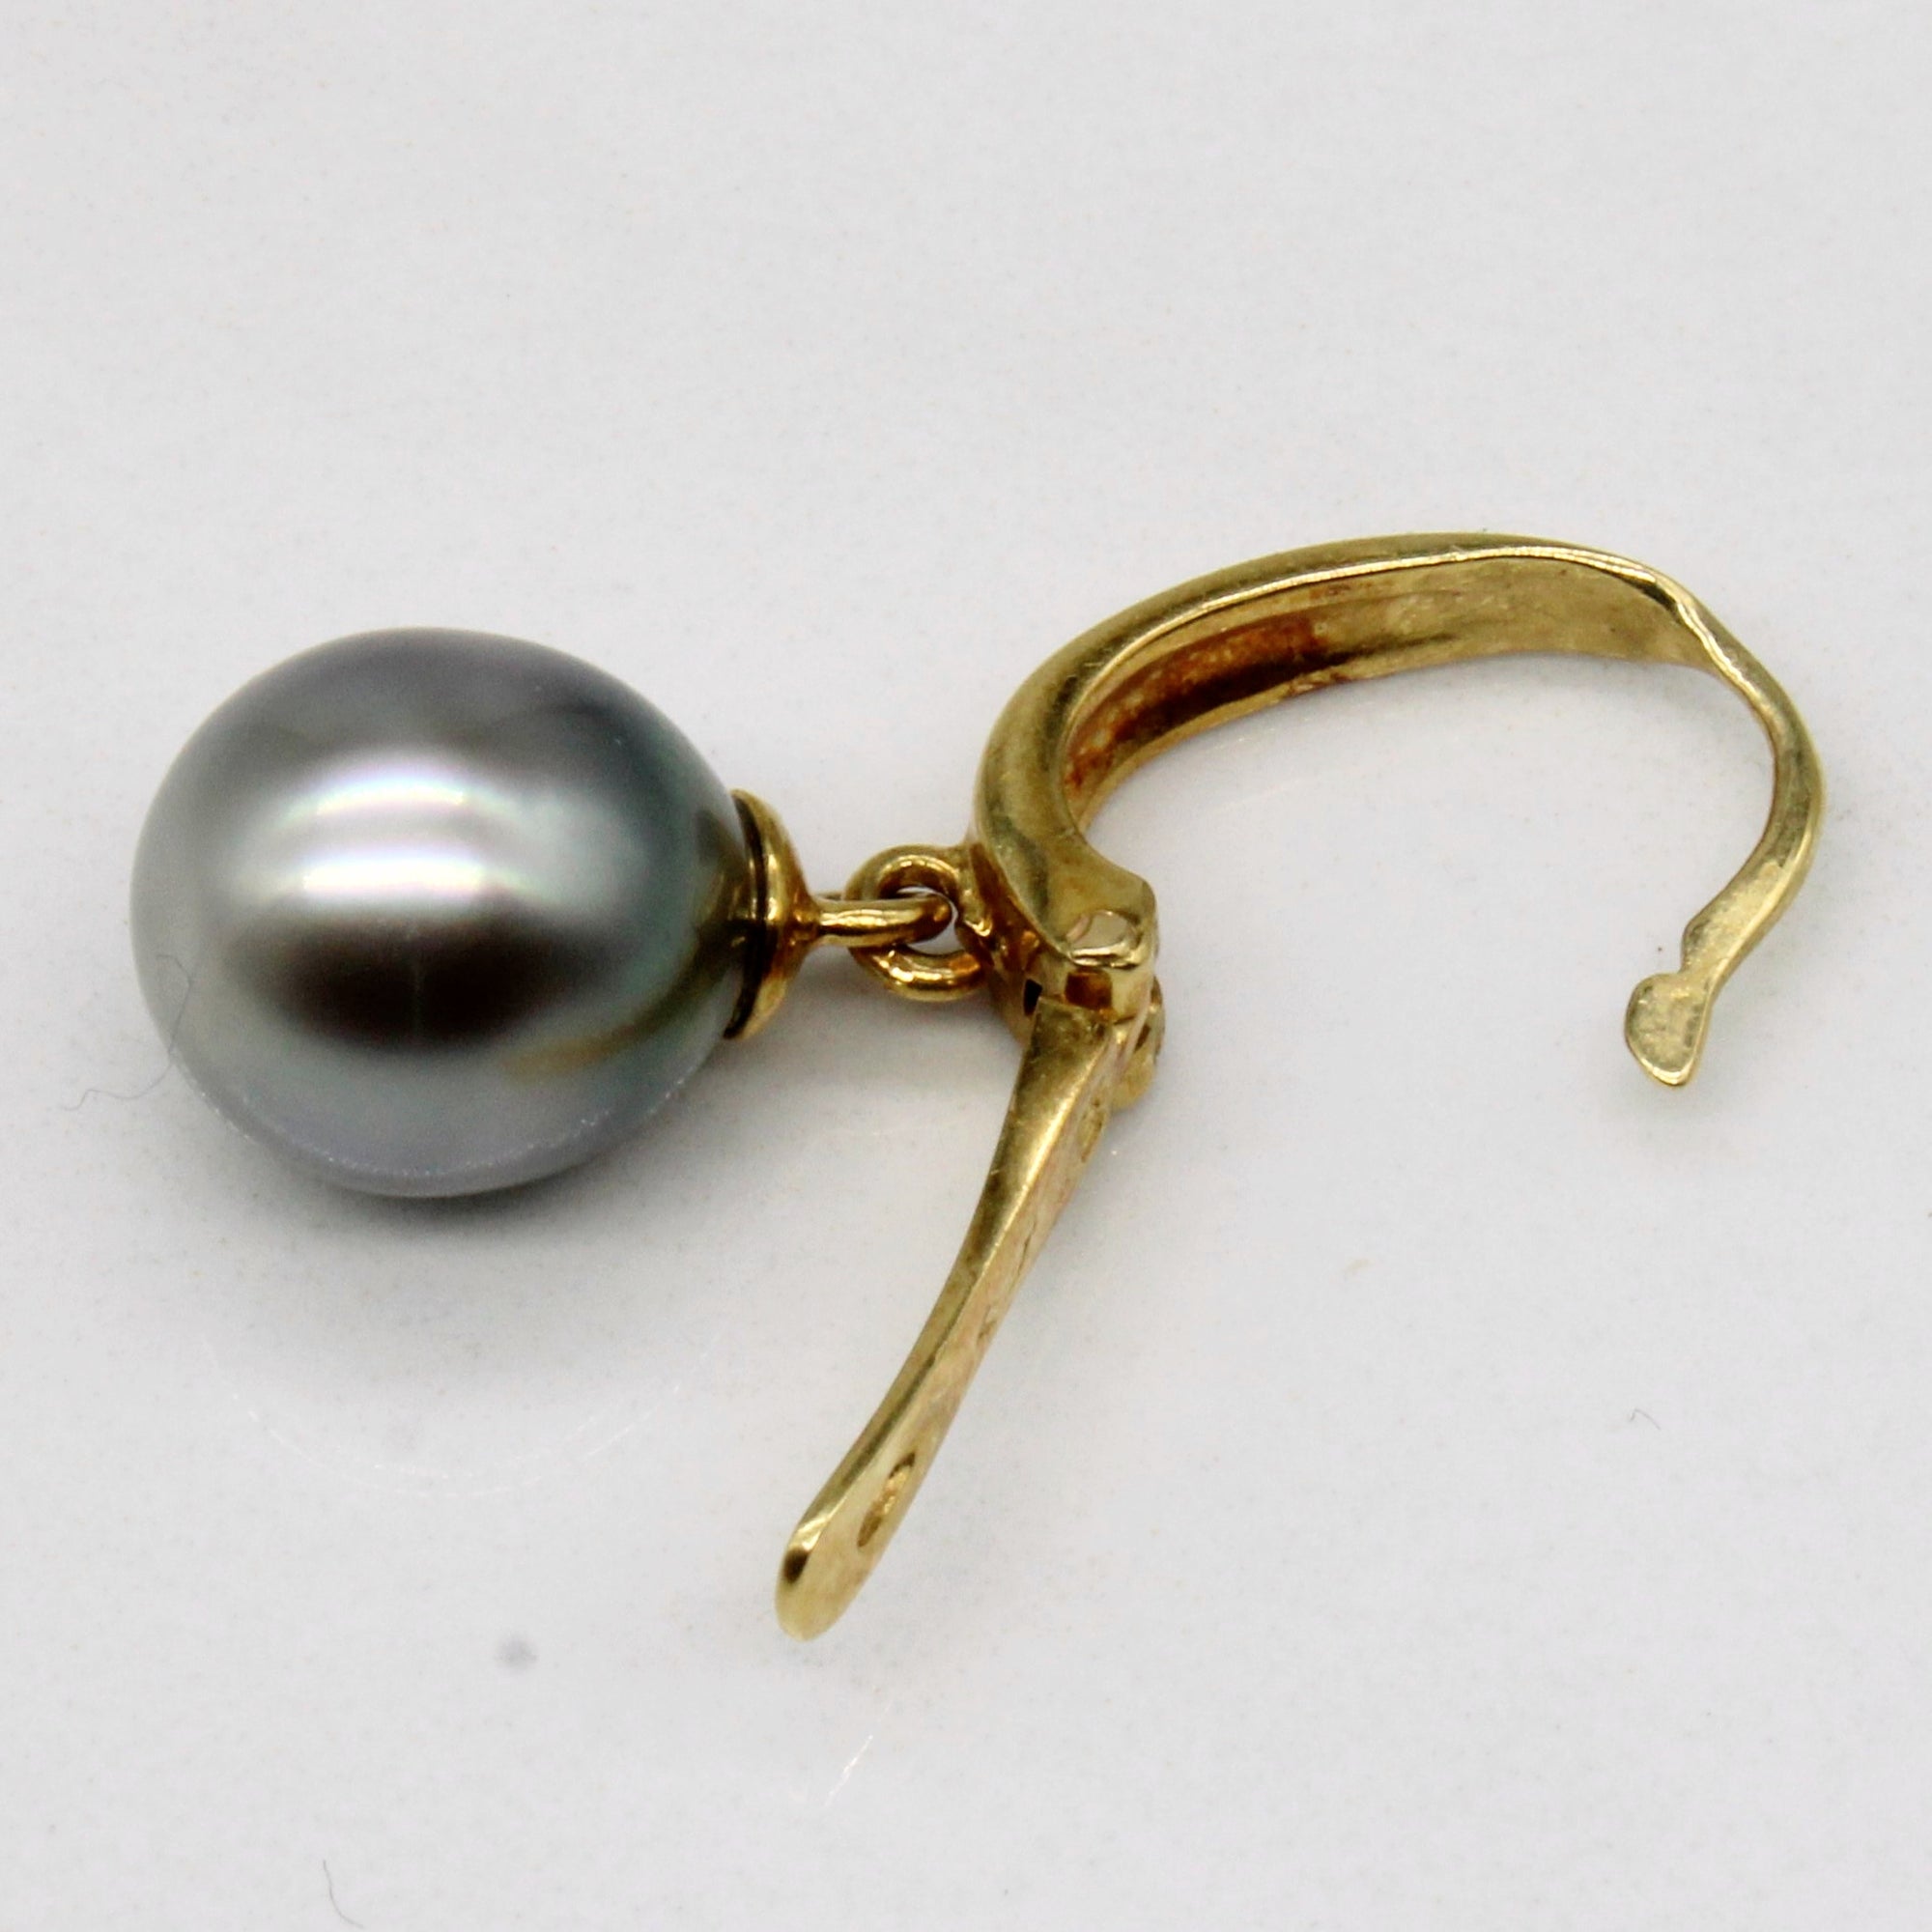 Grey Pearl Drop Earrings